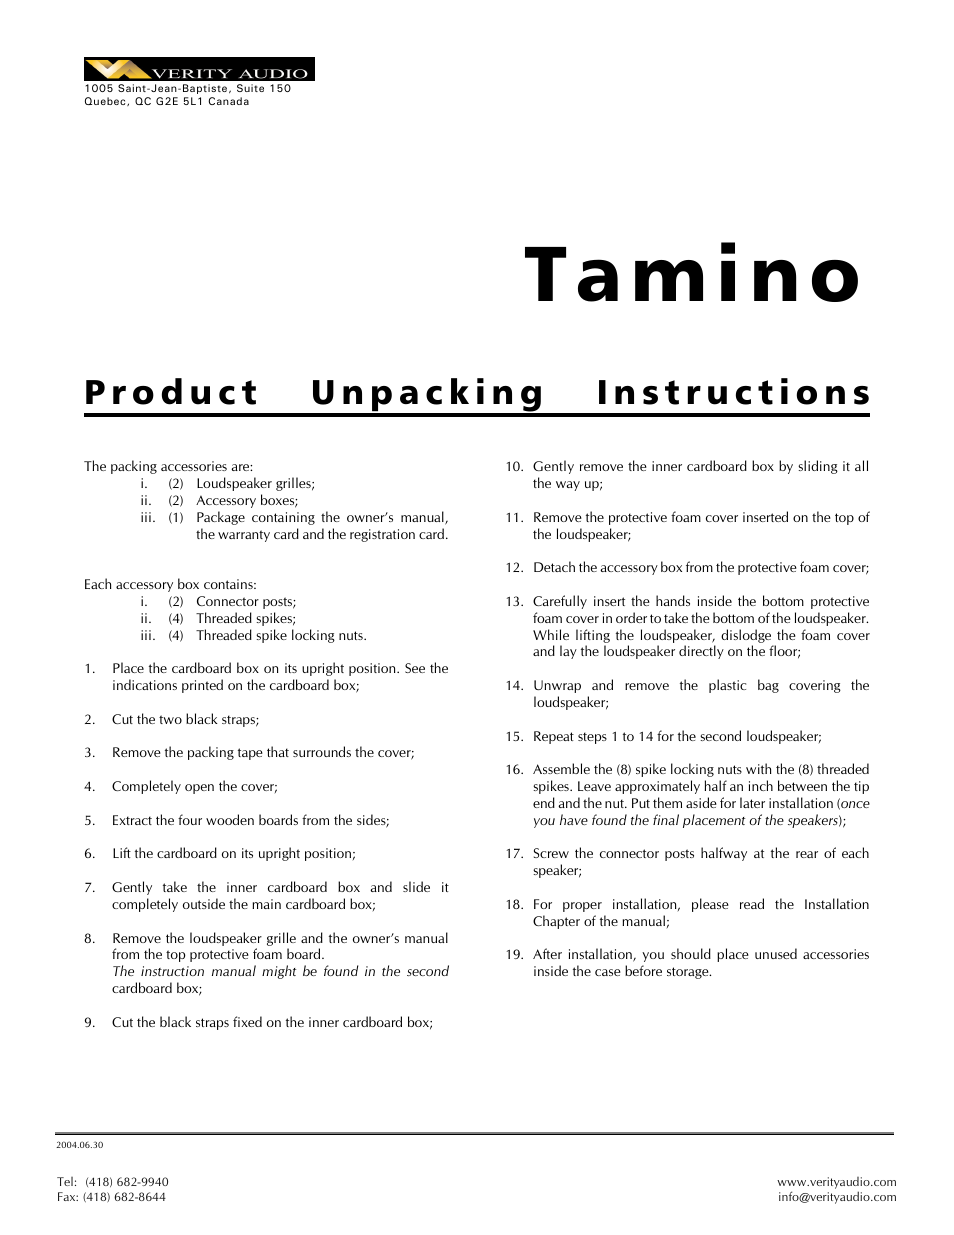 Tamino - Packing / Unpacking Instructions